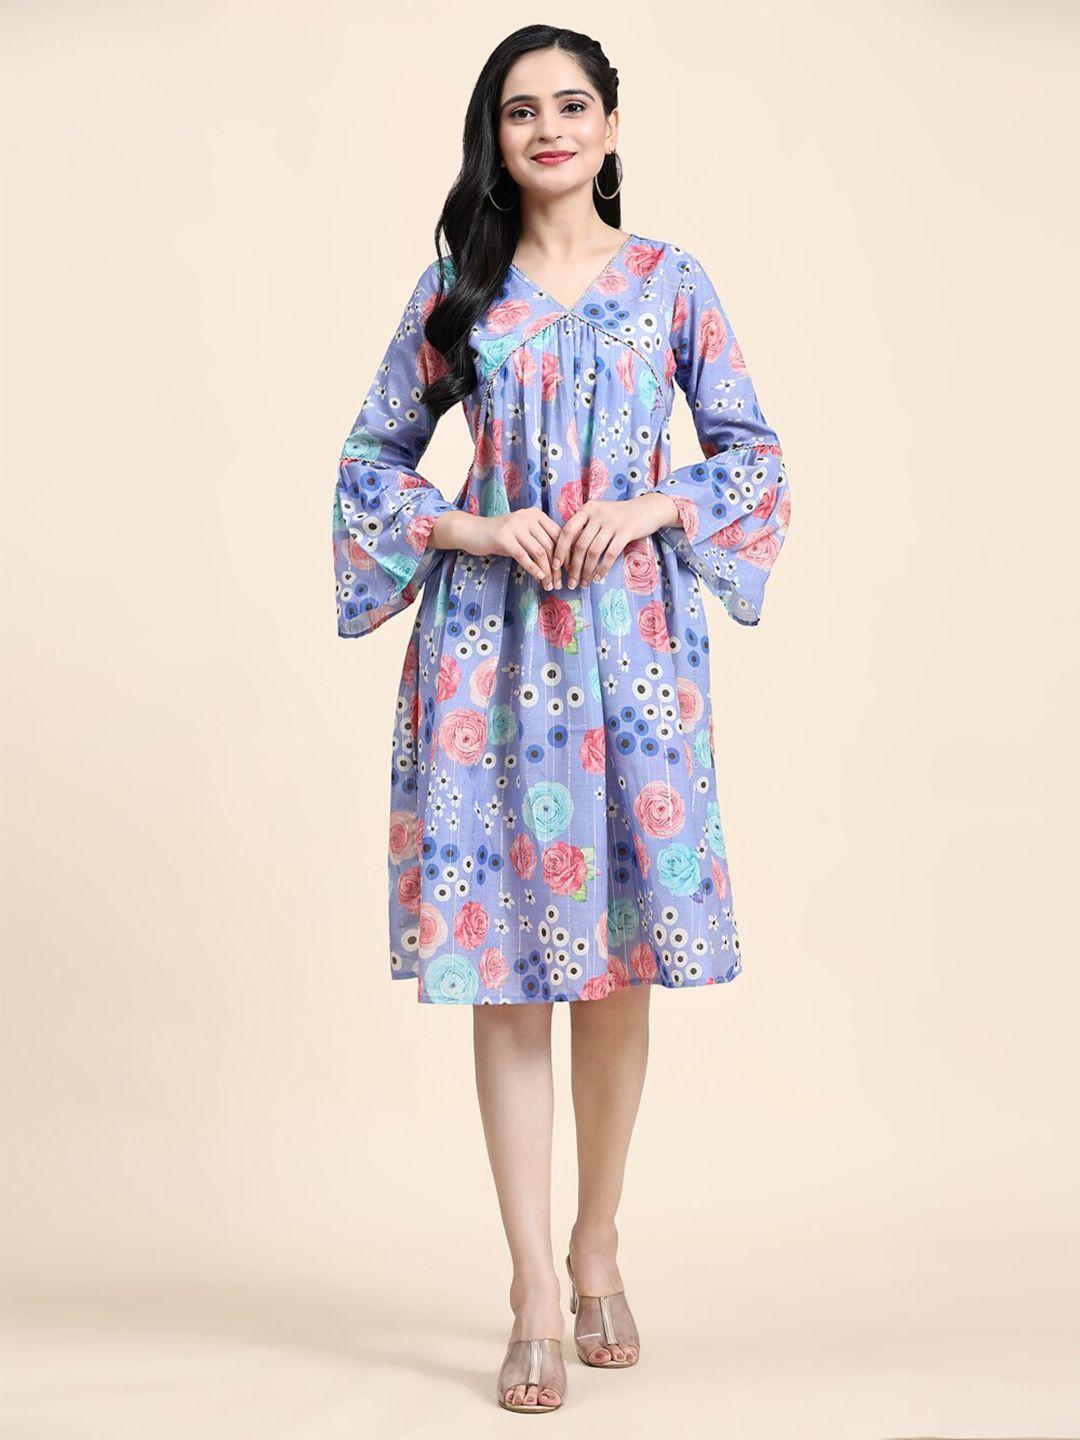 growish-floral-printed-bell-sleeves-a-line-dress